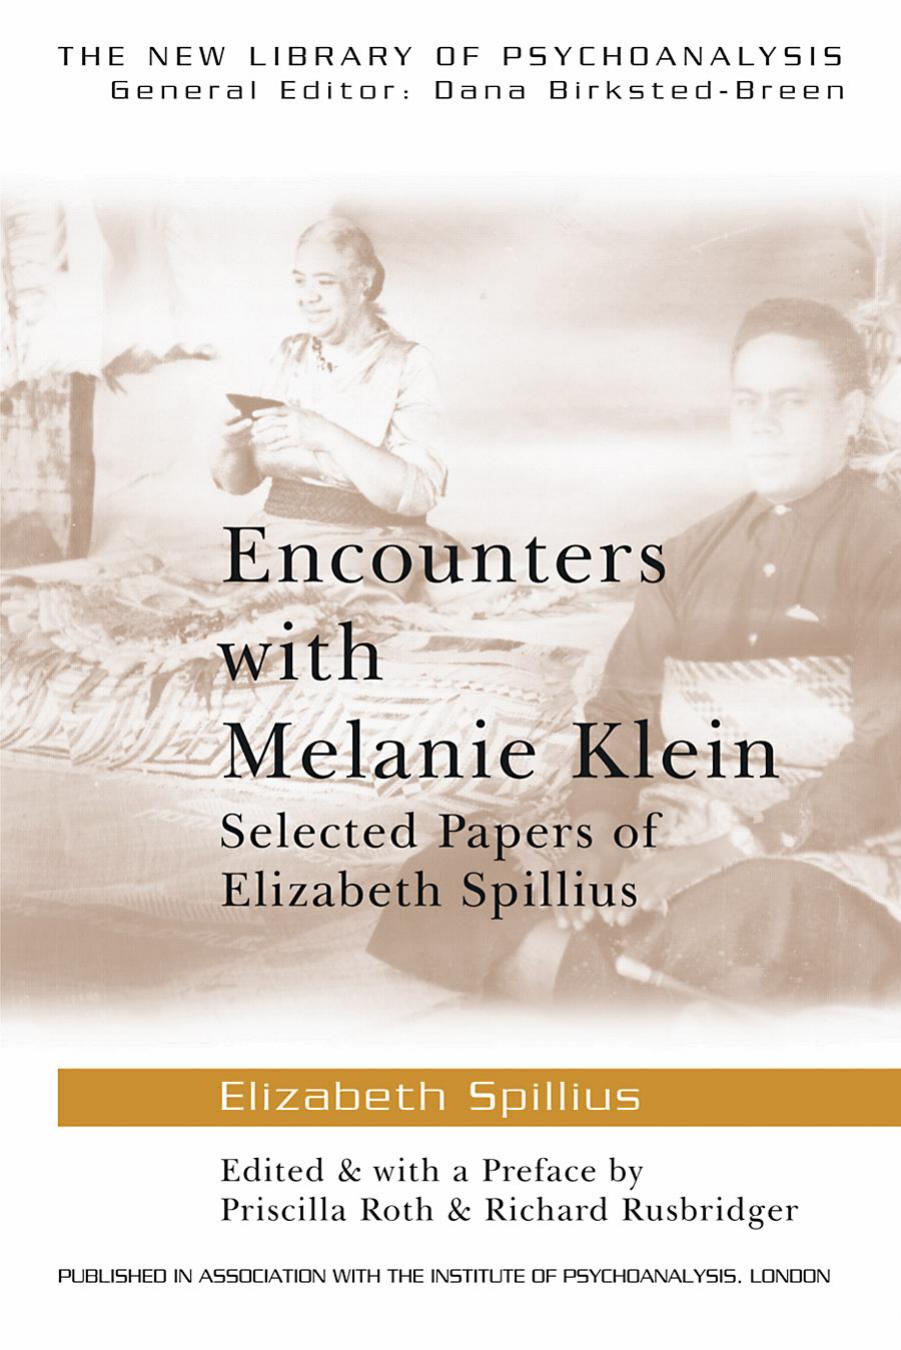 Encounters with Melanie Klein: Selected Papers of Elizabeth Spillius by Elizabeth Spillius